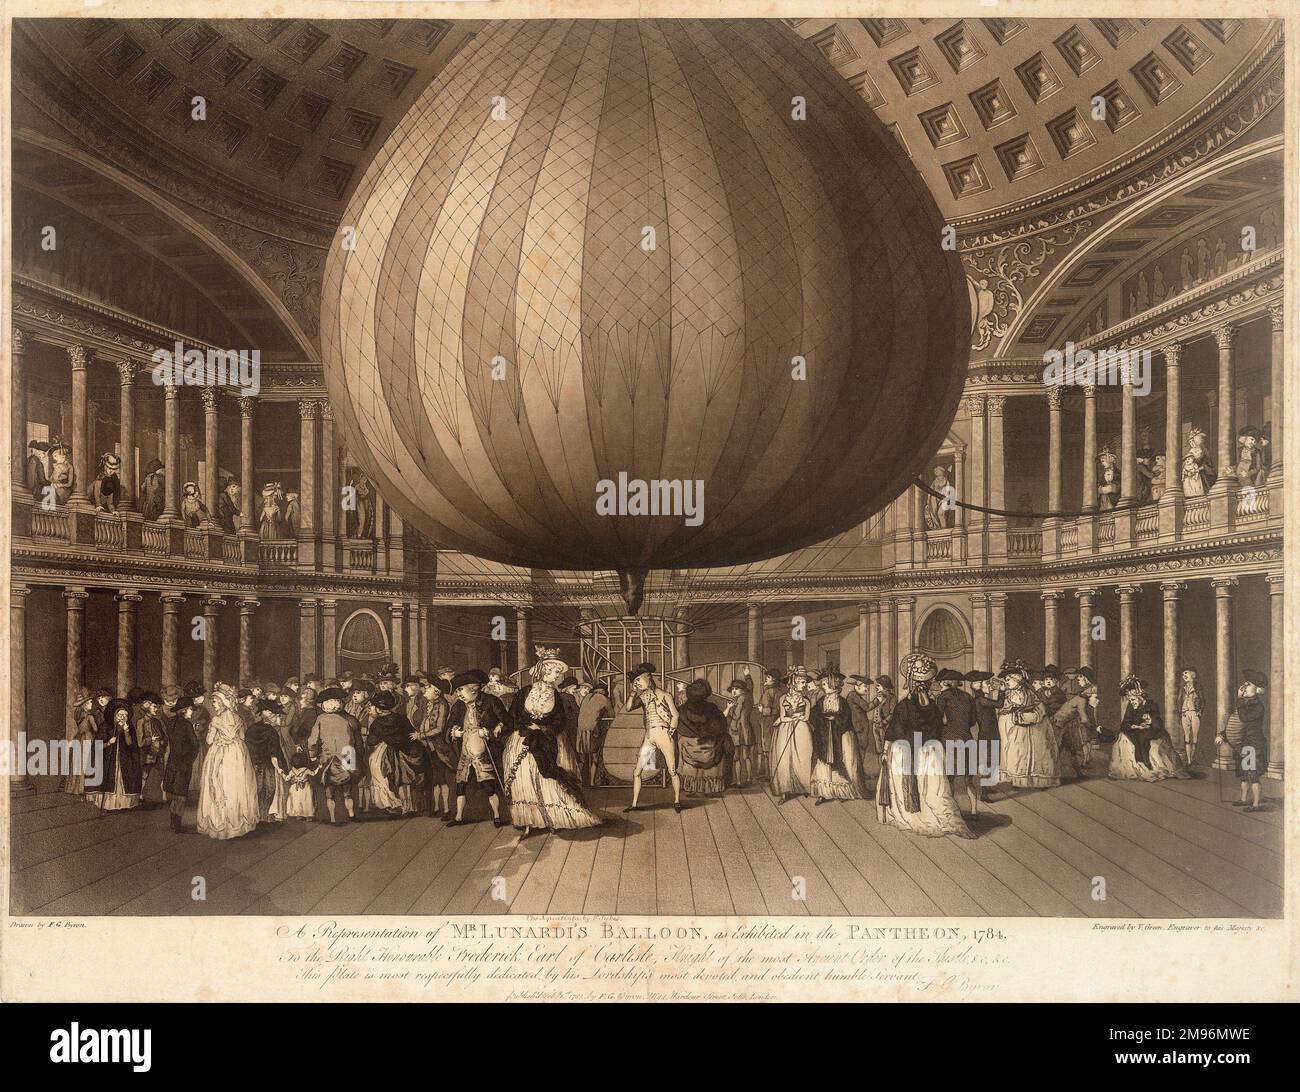 Lunardi's balloon, exhibited in the Pantheon, Oxford Street, London. Stock Photo